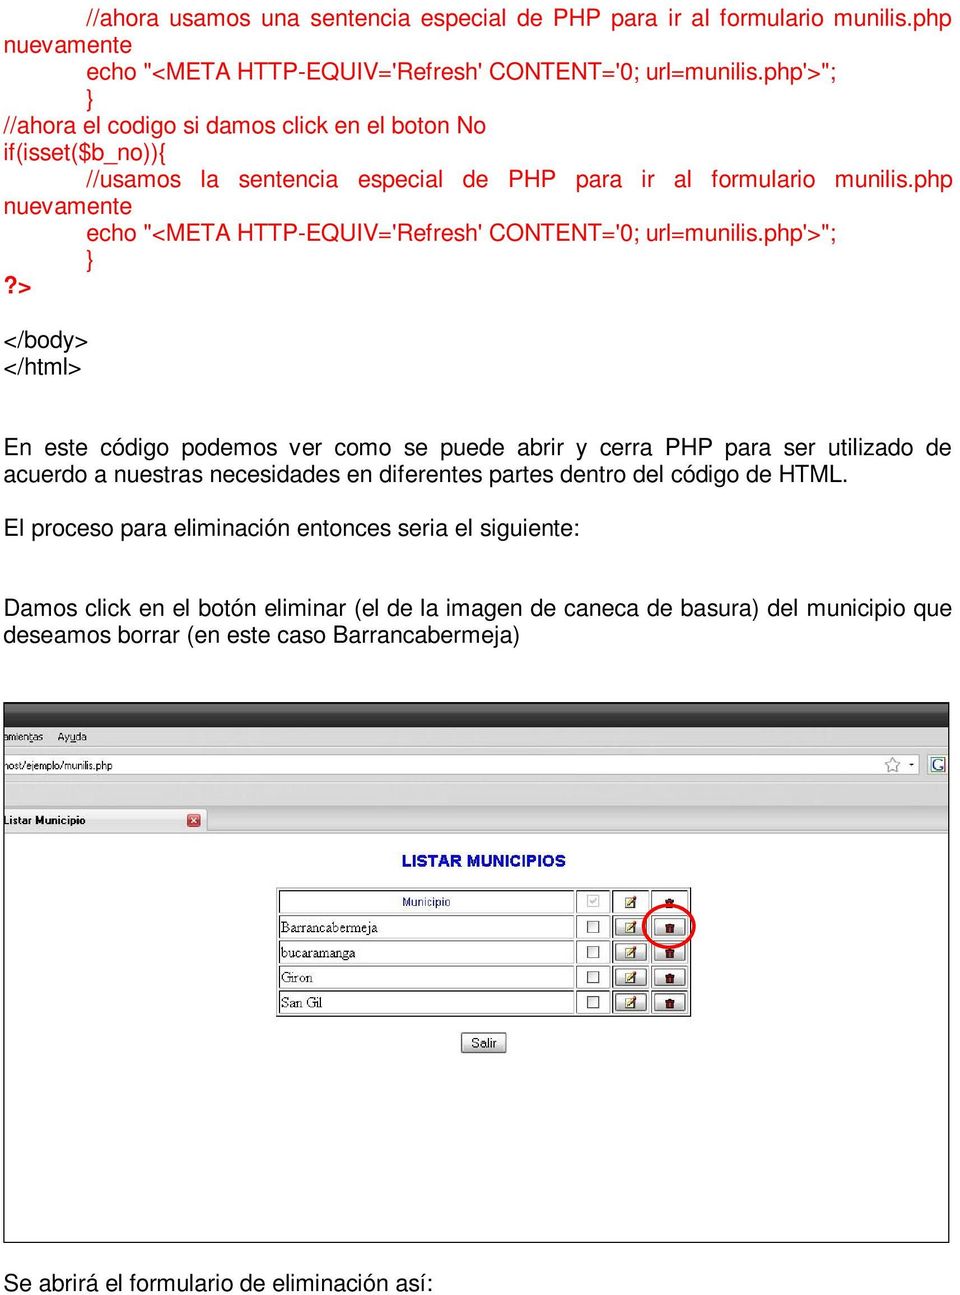 php nuevamente echo "<META HTTP-EQUIV='Refresh' CONTENT='0; url=munilis.php'>";?